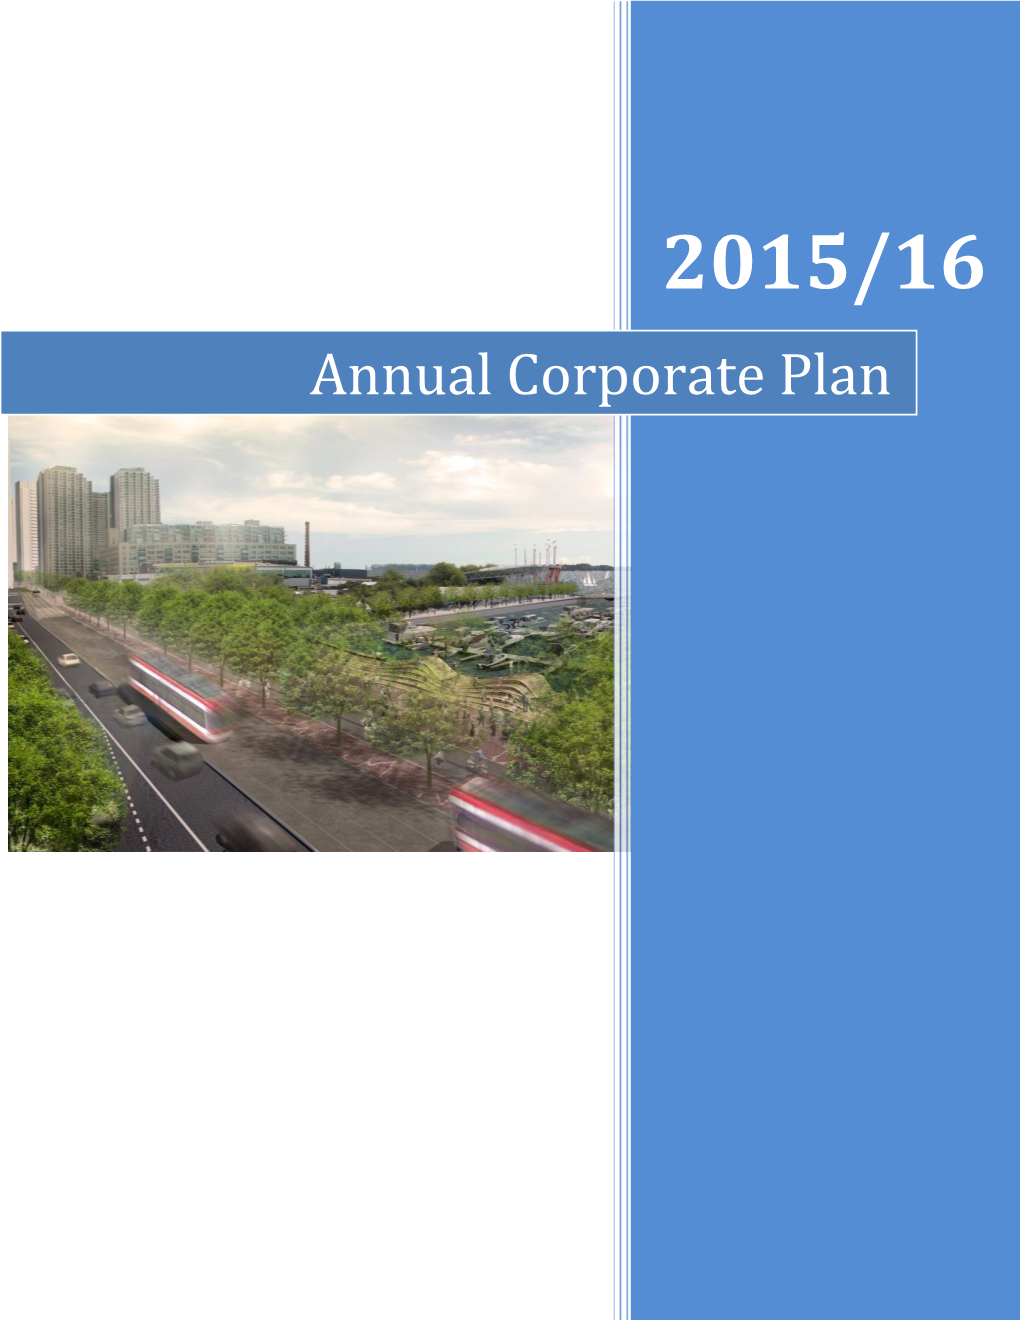 Waterfront Toronto Annual Corporate Plan